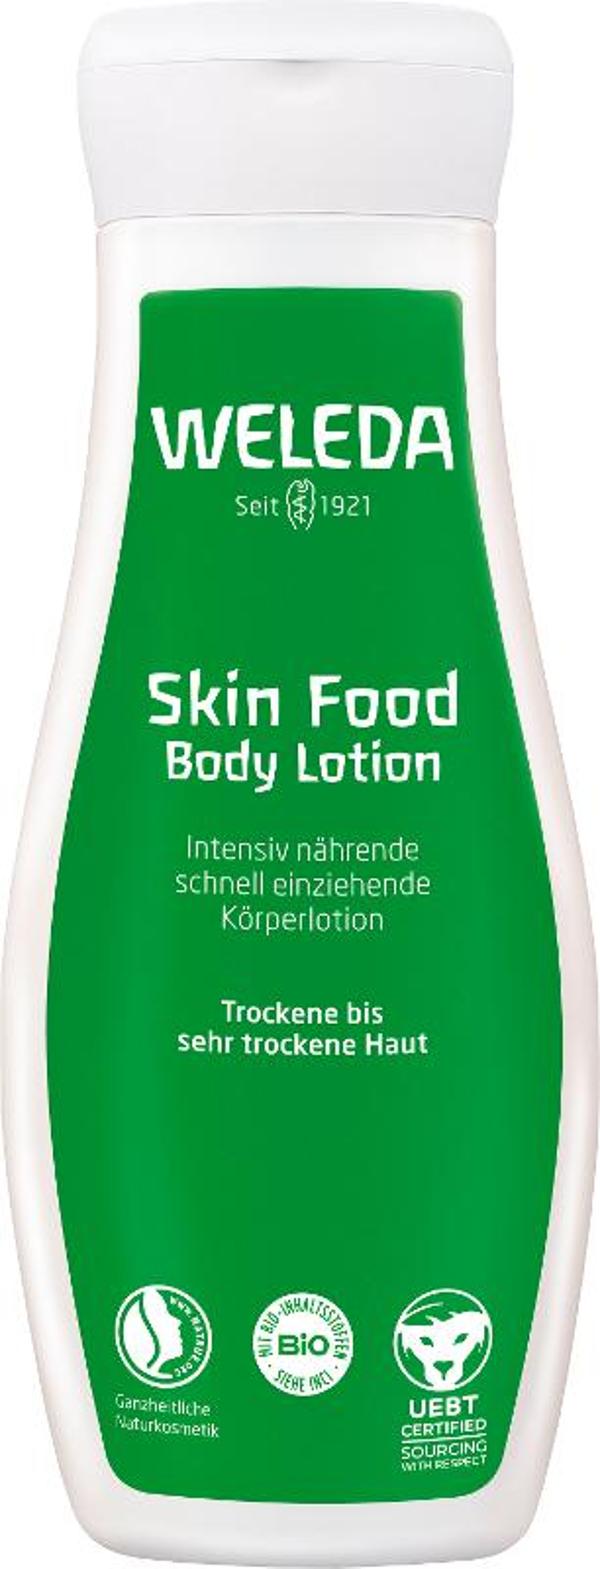 Produktfoto zu Skin Food Körperlotion, 200 ml